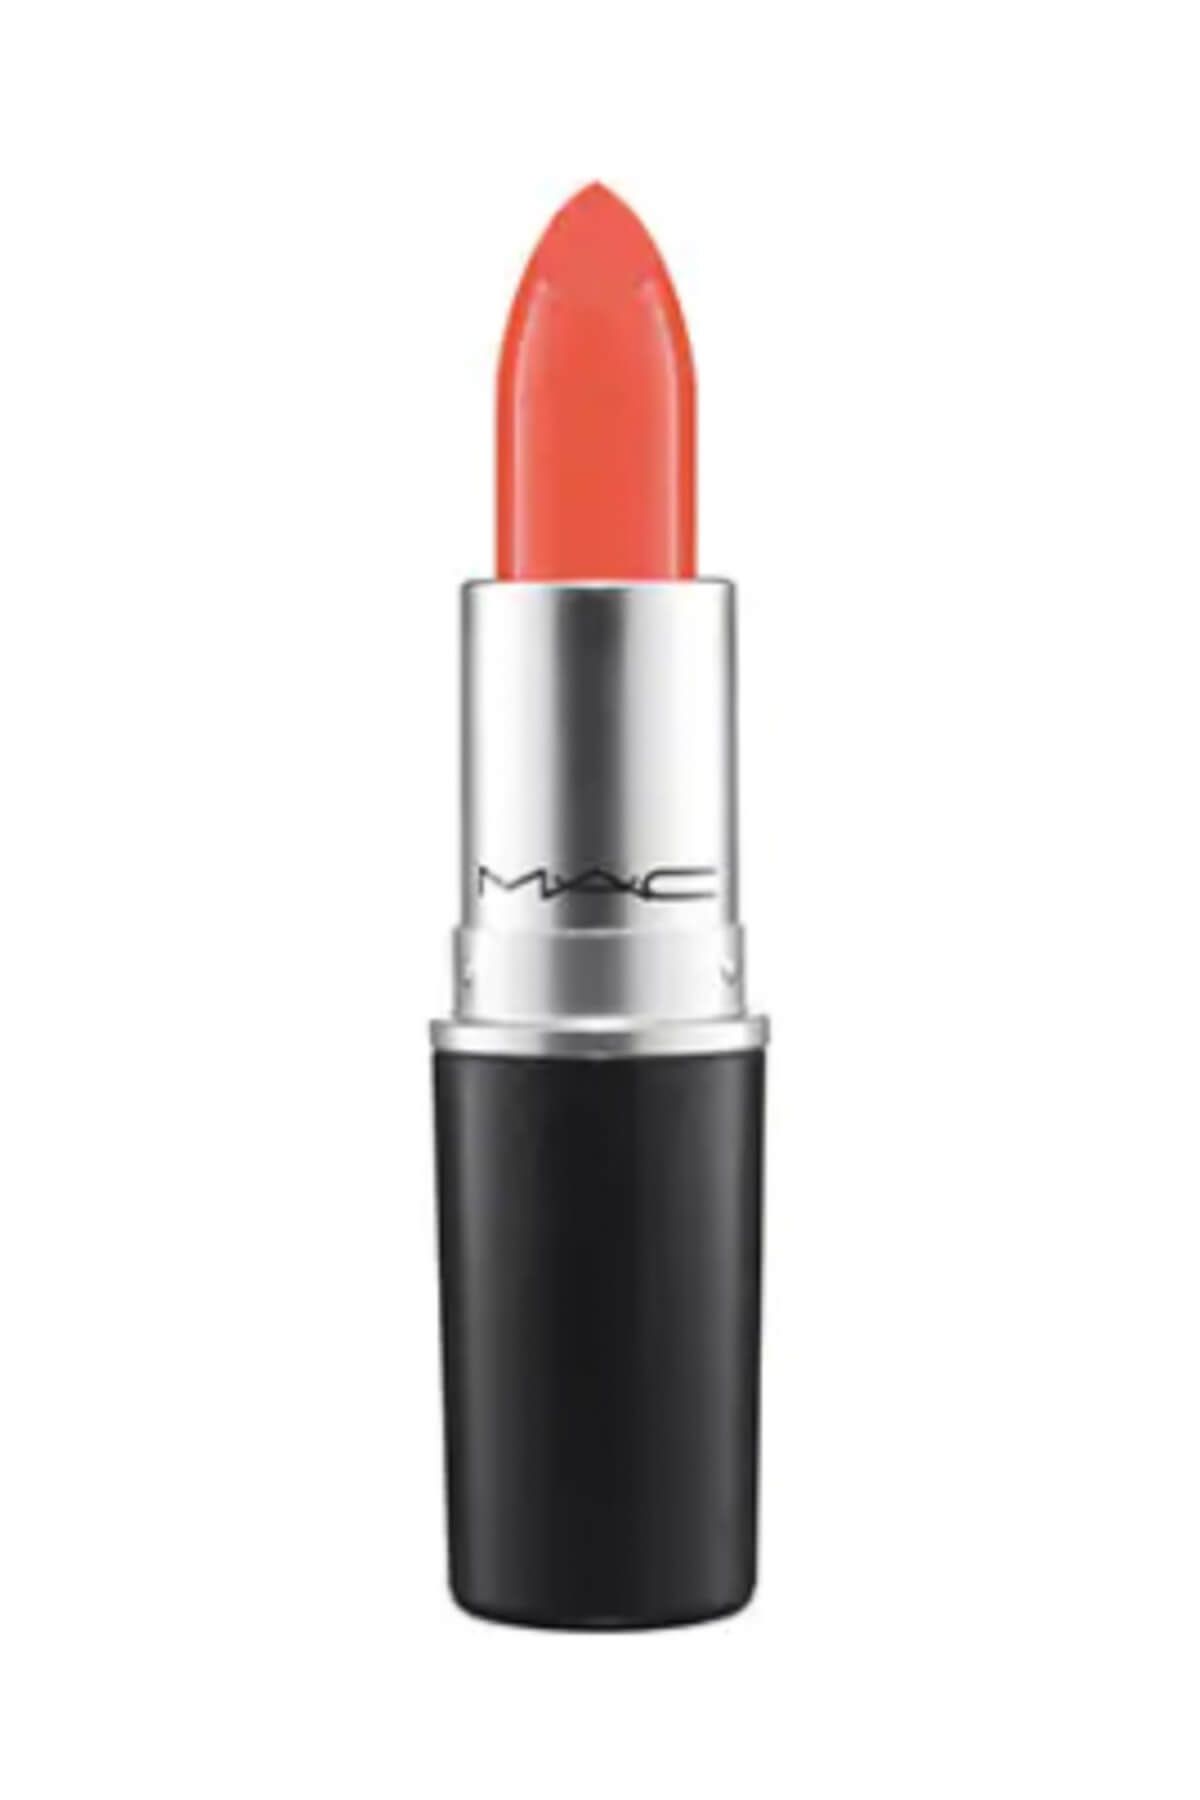 Mac Ruj - Cremesheen Lipstick Pretty Boy 3 g 773602373314